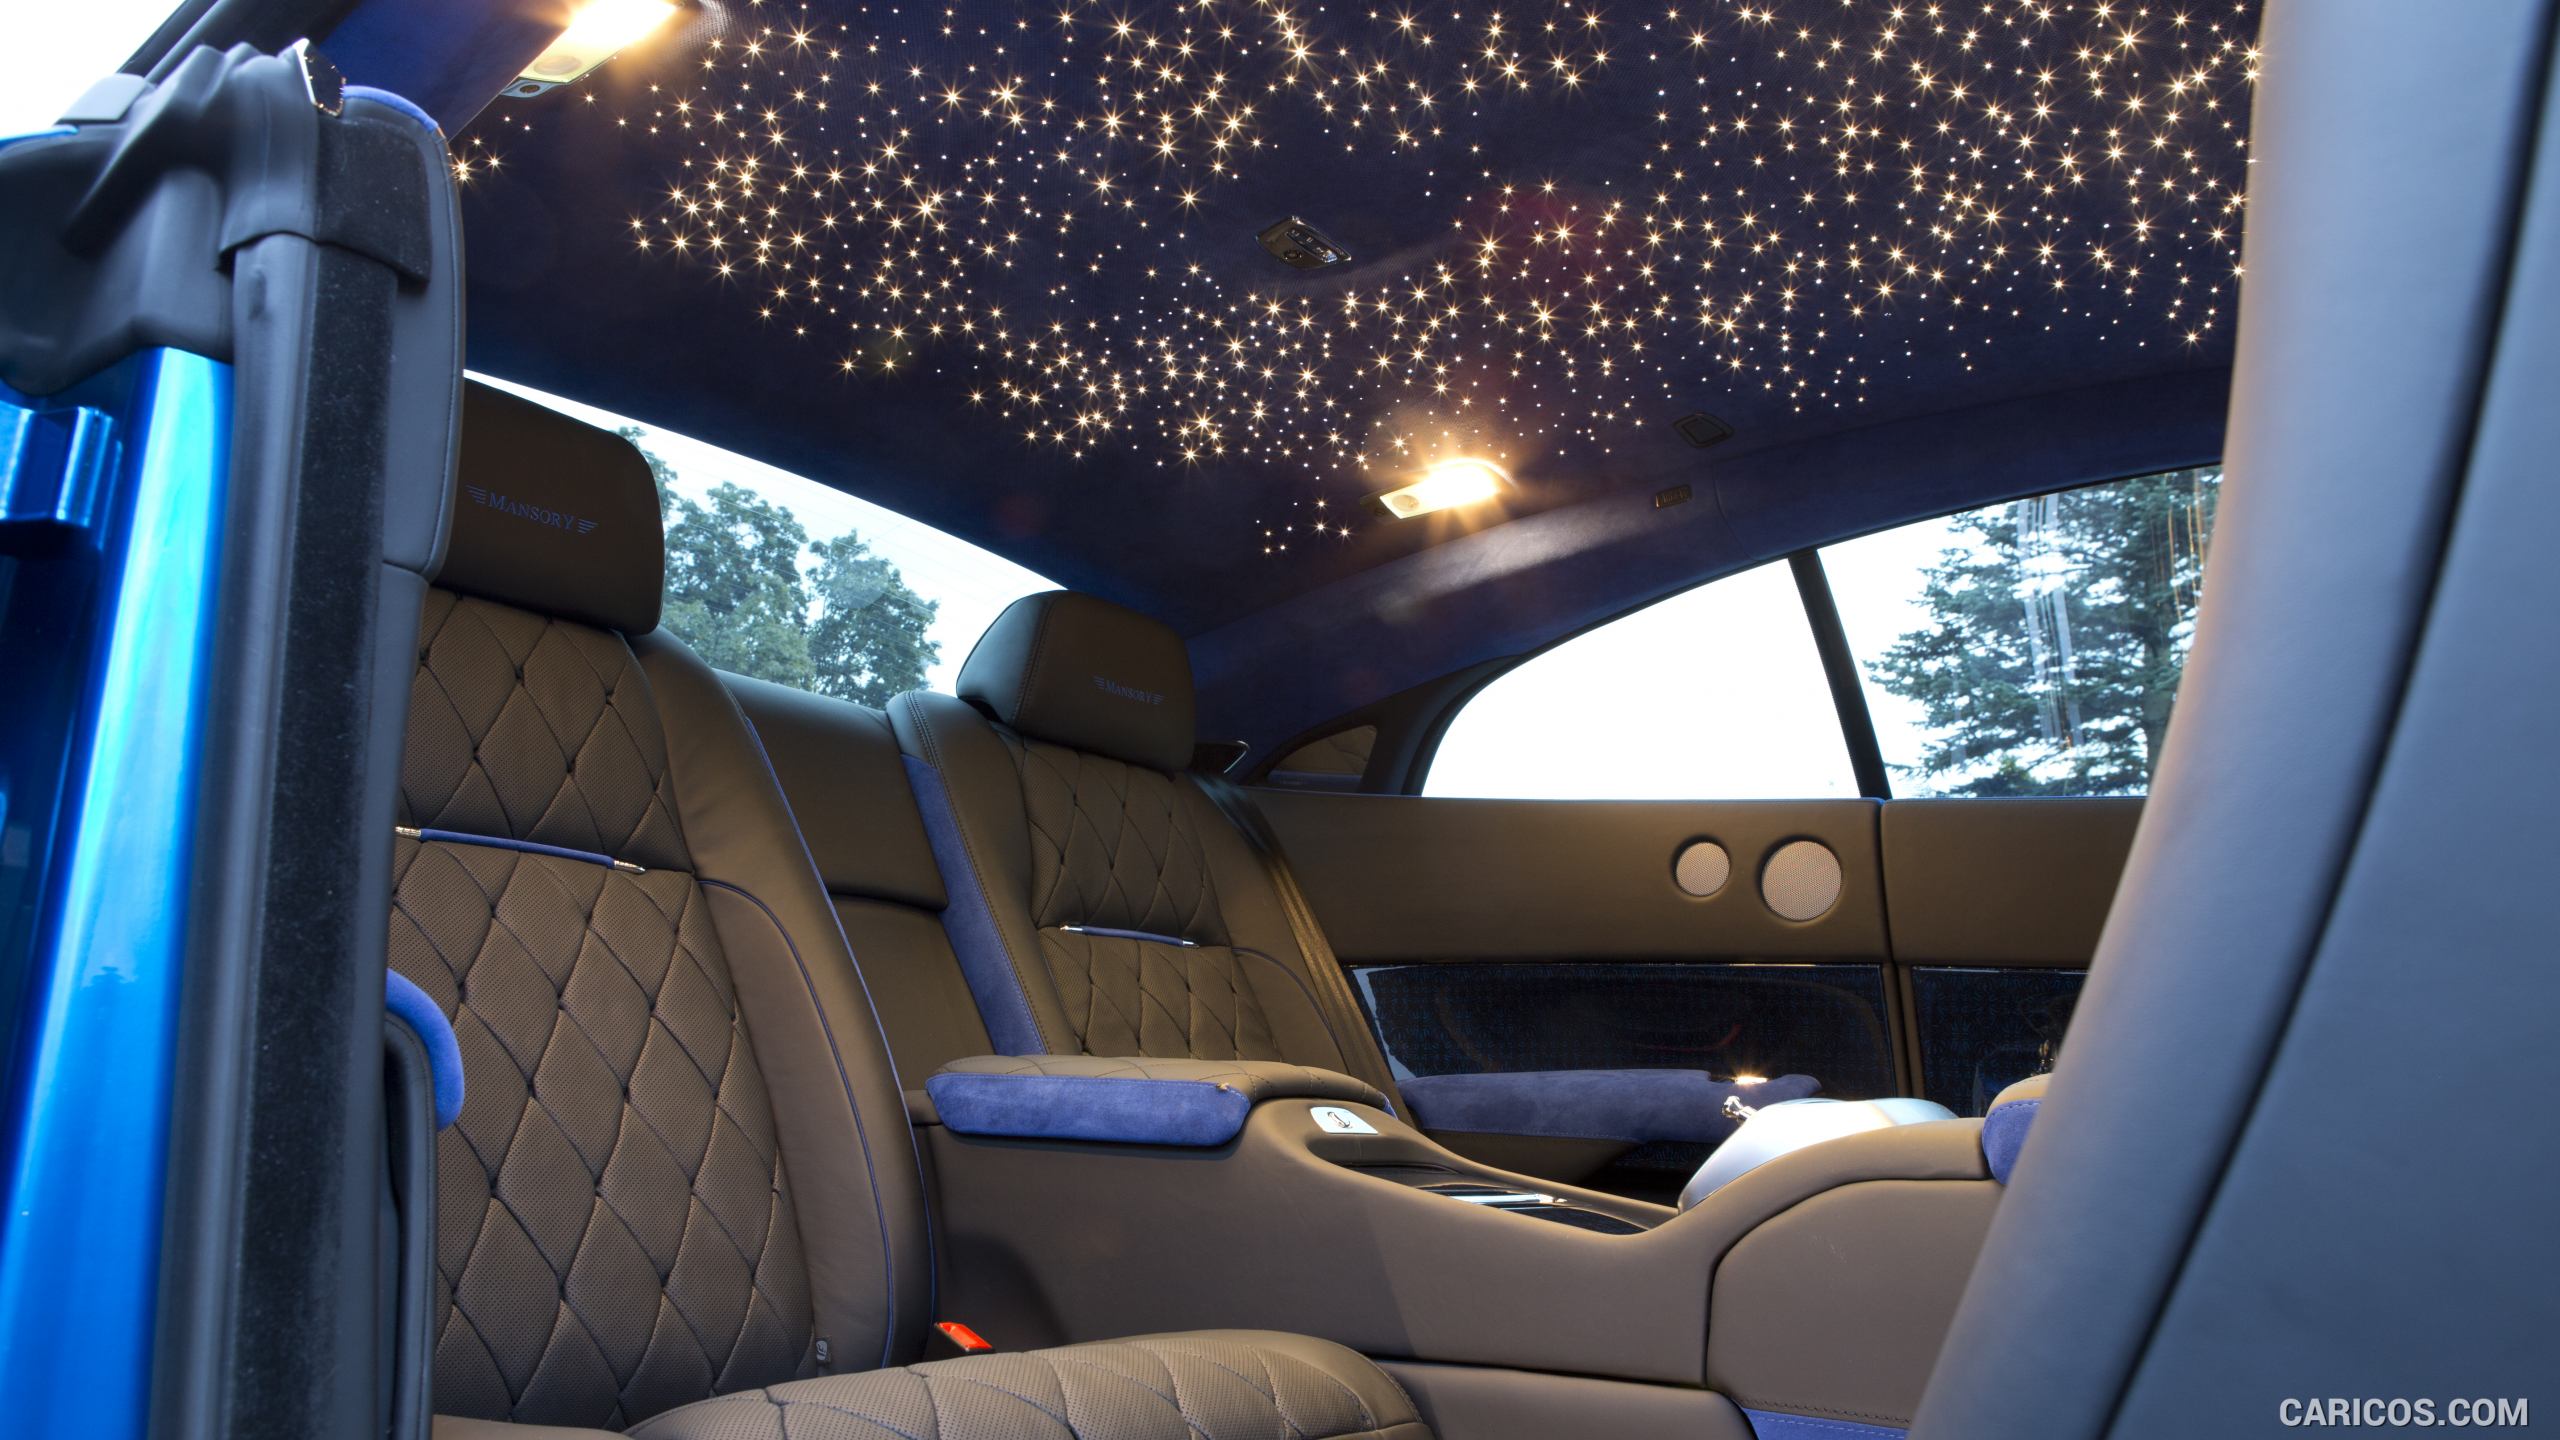 2015 Mansory Bleurion Based On Rolls Royce Wraith Interior